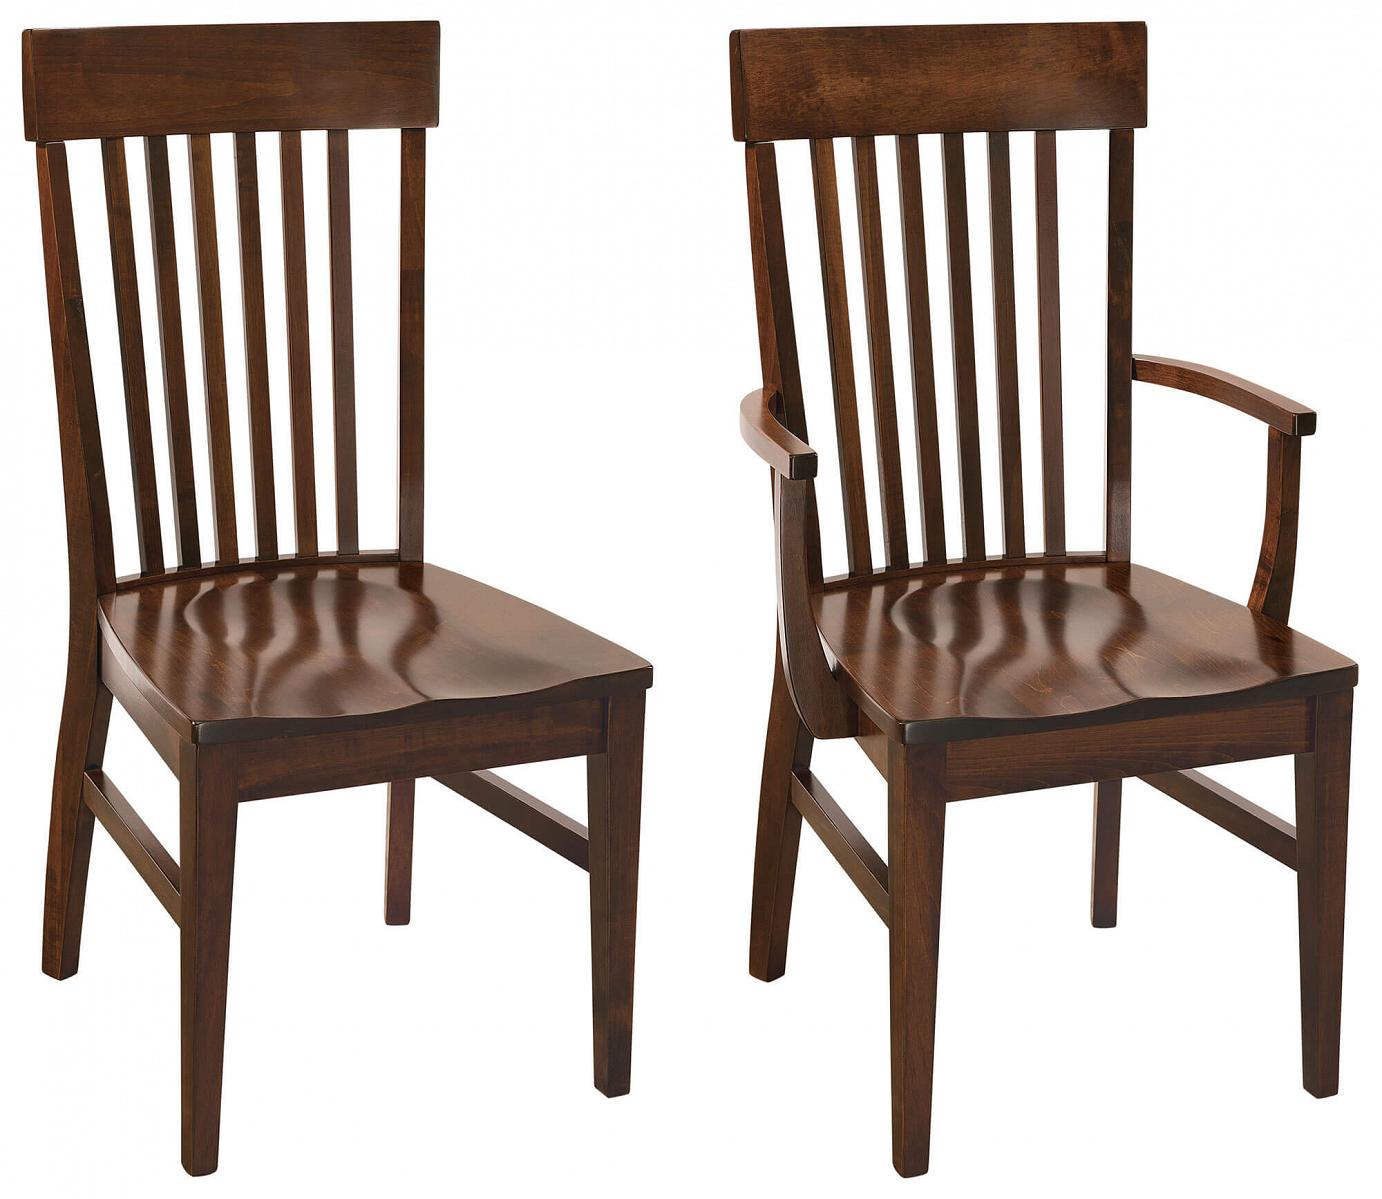 RH Yoder Collins Chairs